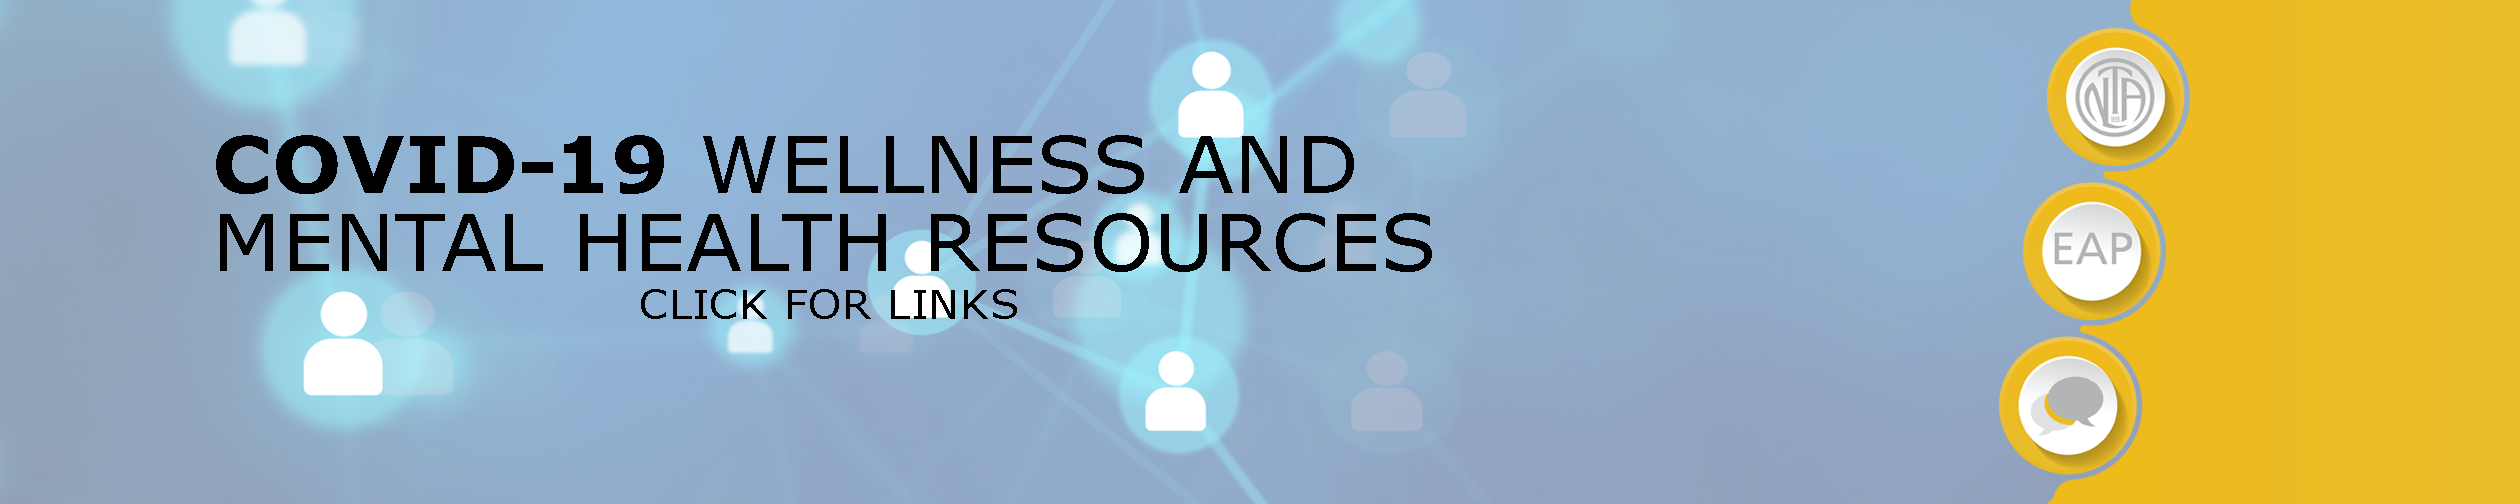 EAP-Resources-2020-slider